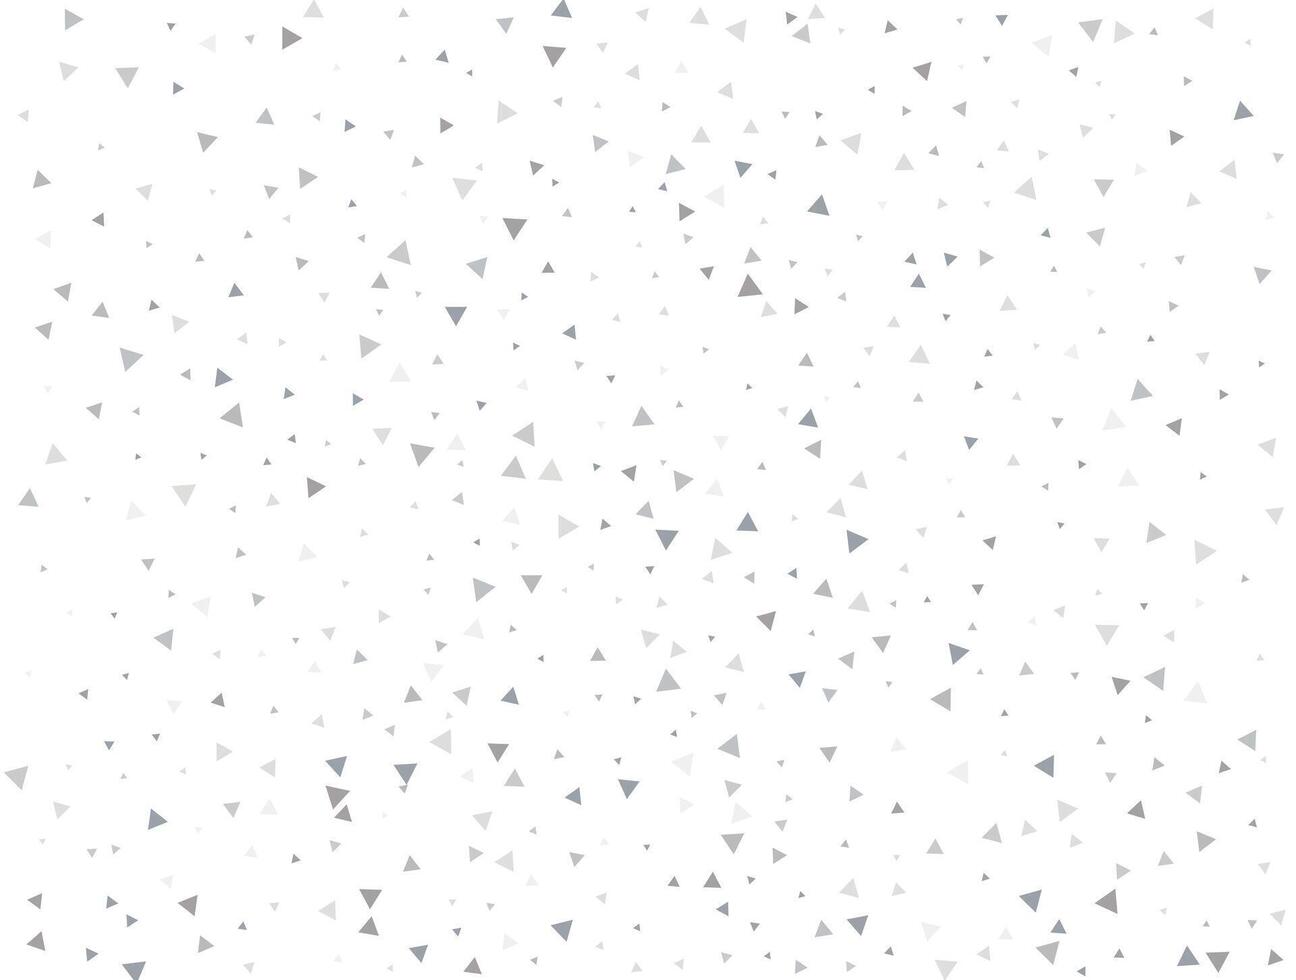 Birthday Light silver Triangular glitter confetti background. White festive texture. vector